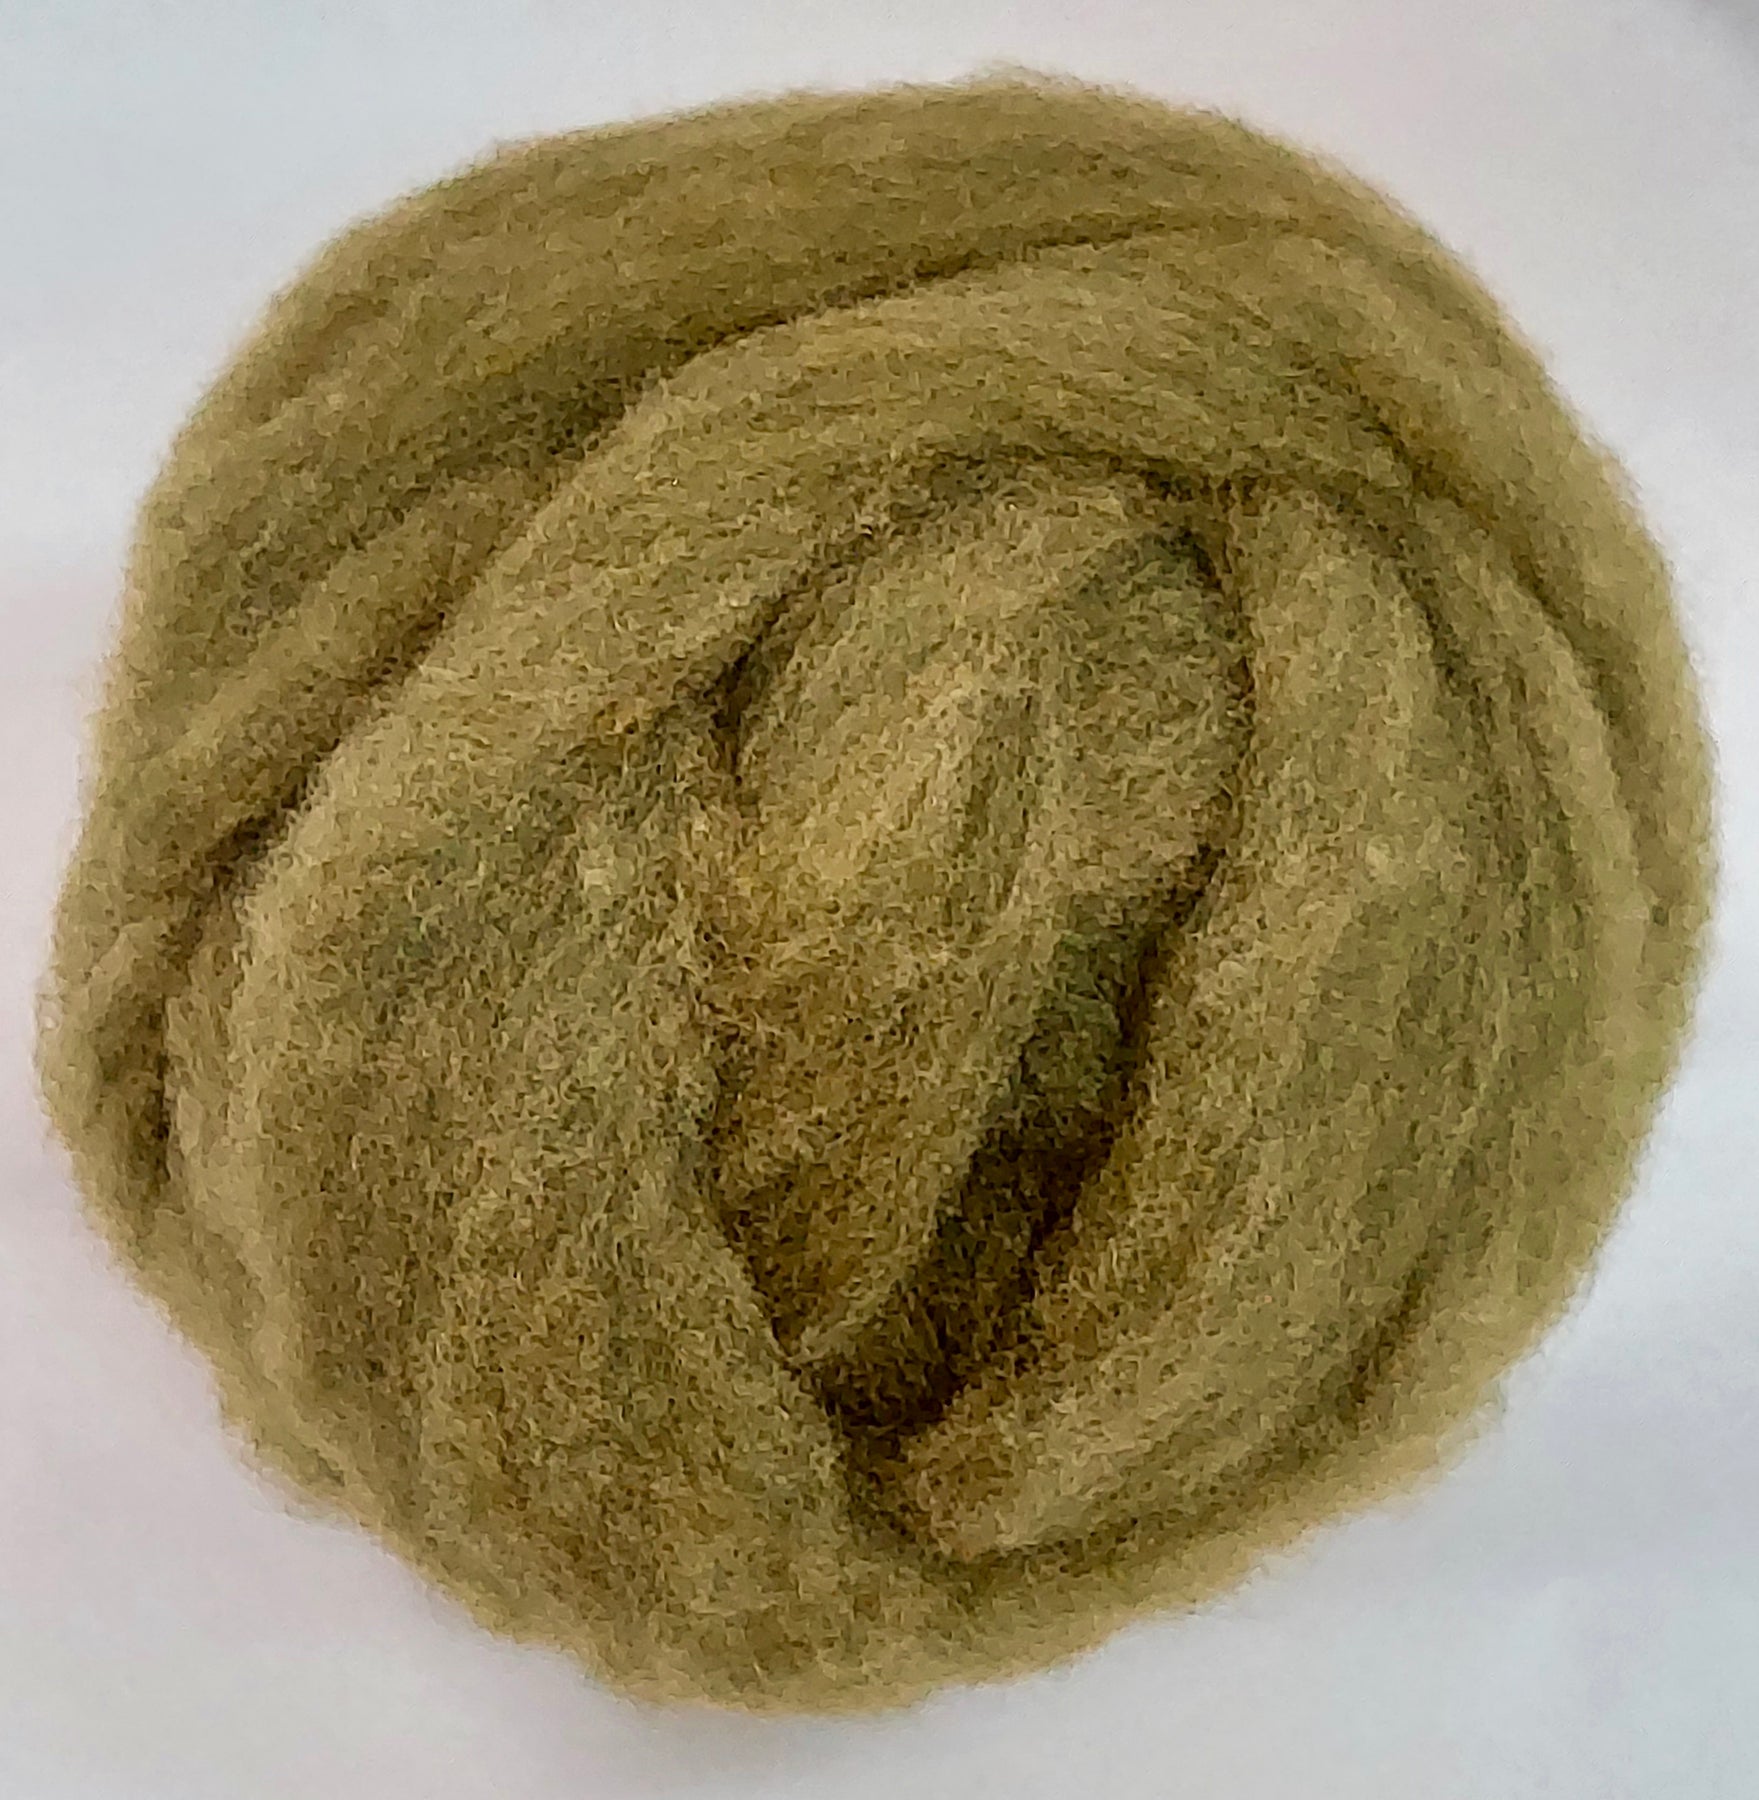 KHAKI DRAB- American Farm Wool- Merino Wool Roving for Felting, Spinni –  FeltLOOM